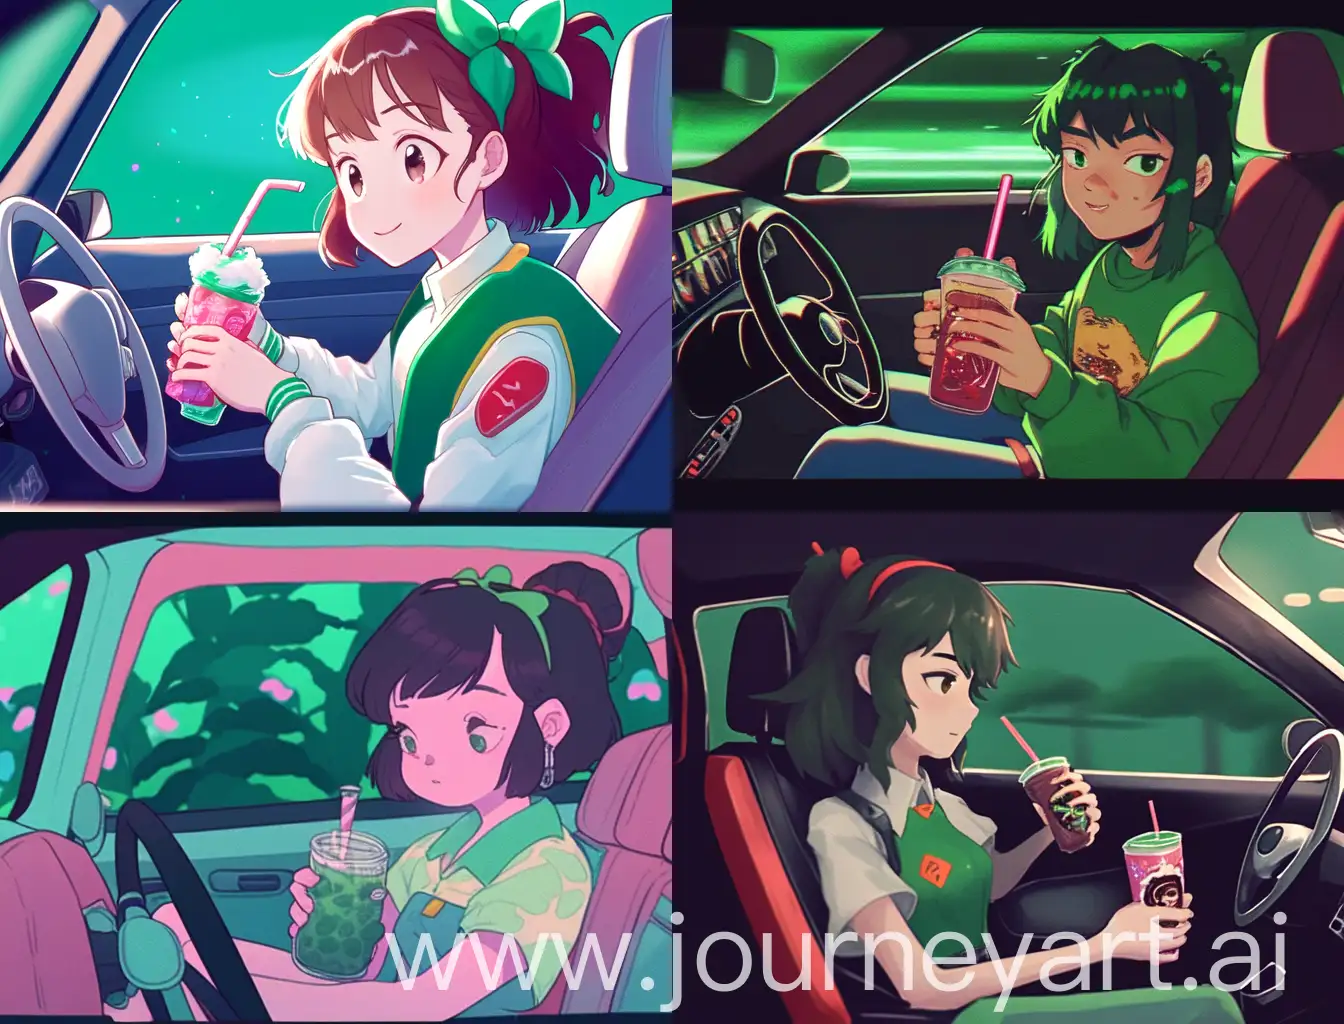 Girl-Enjoying-Boba-Tea-in-Green-Car